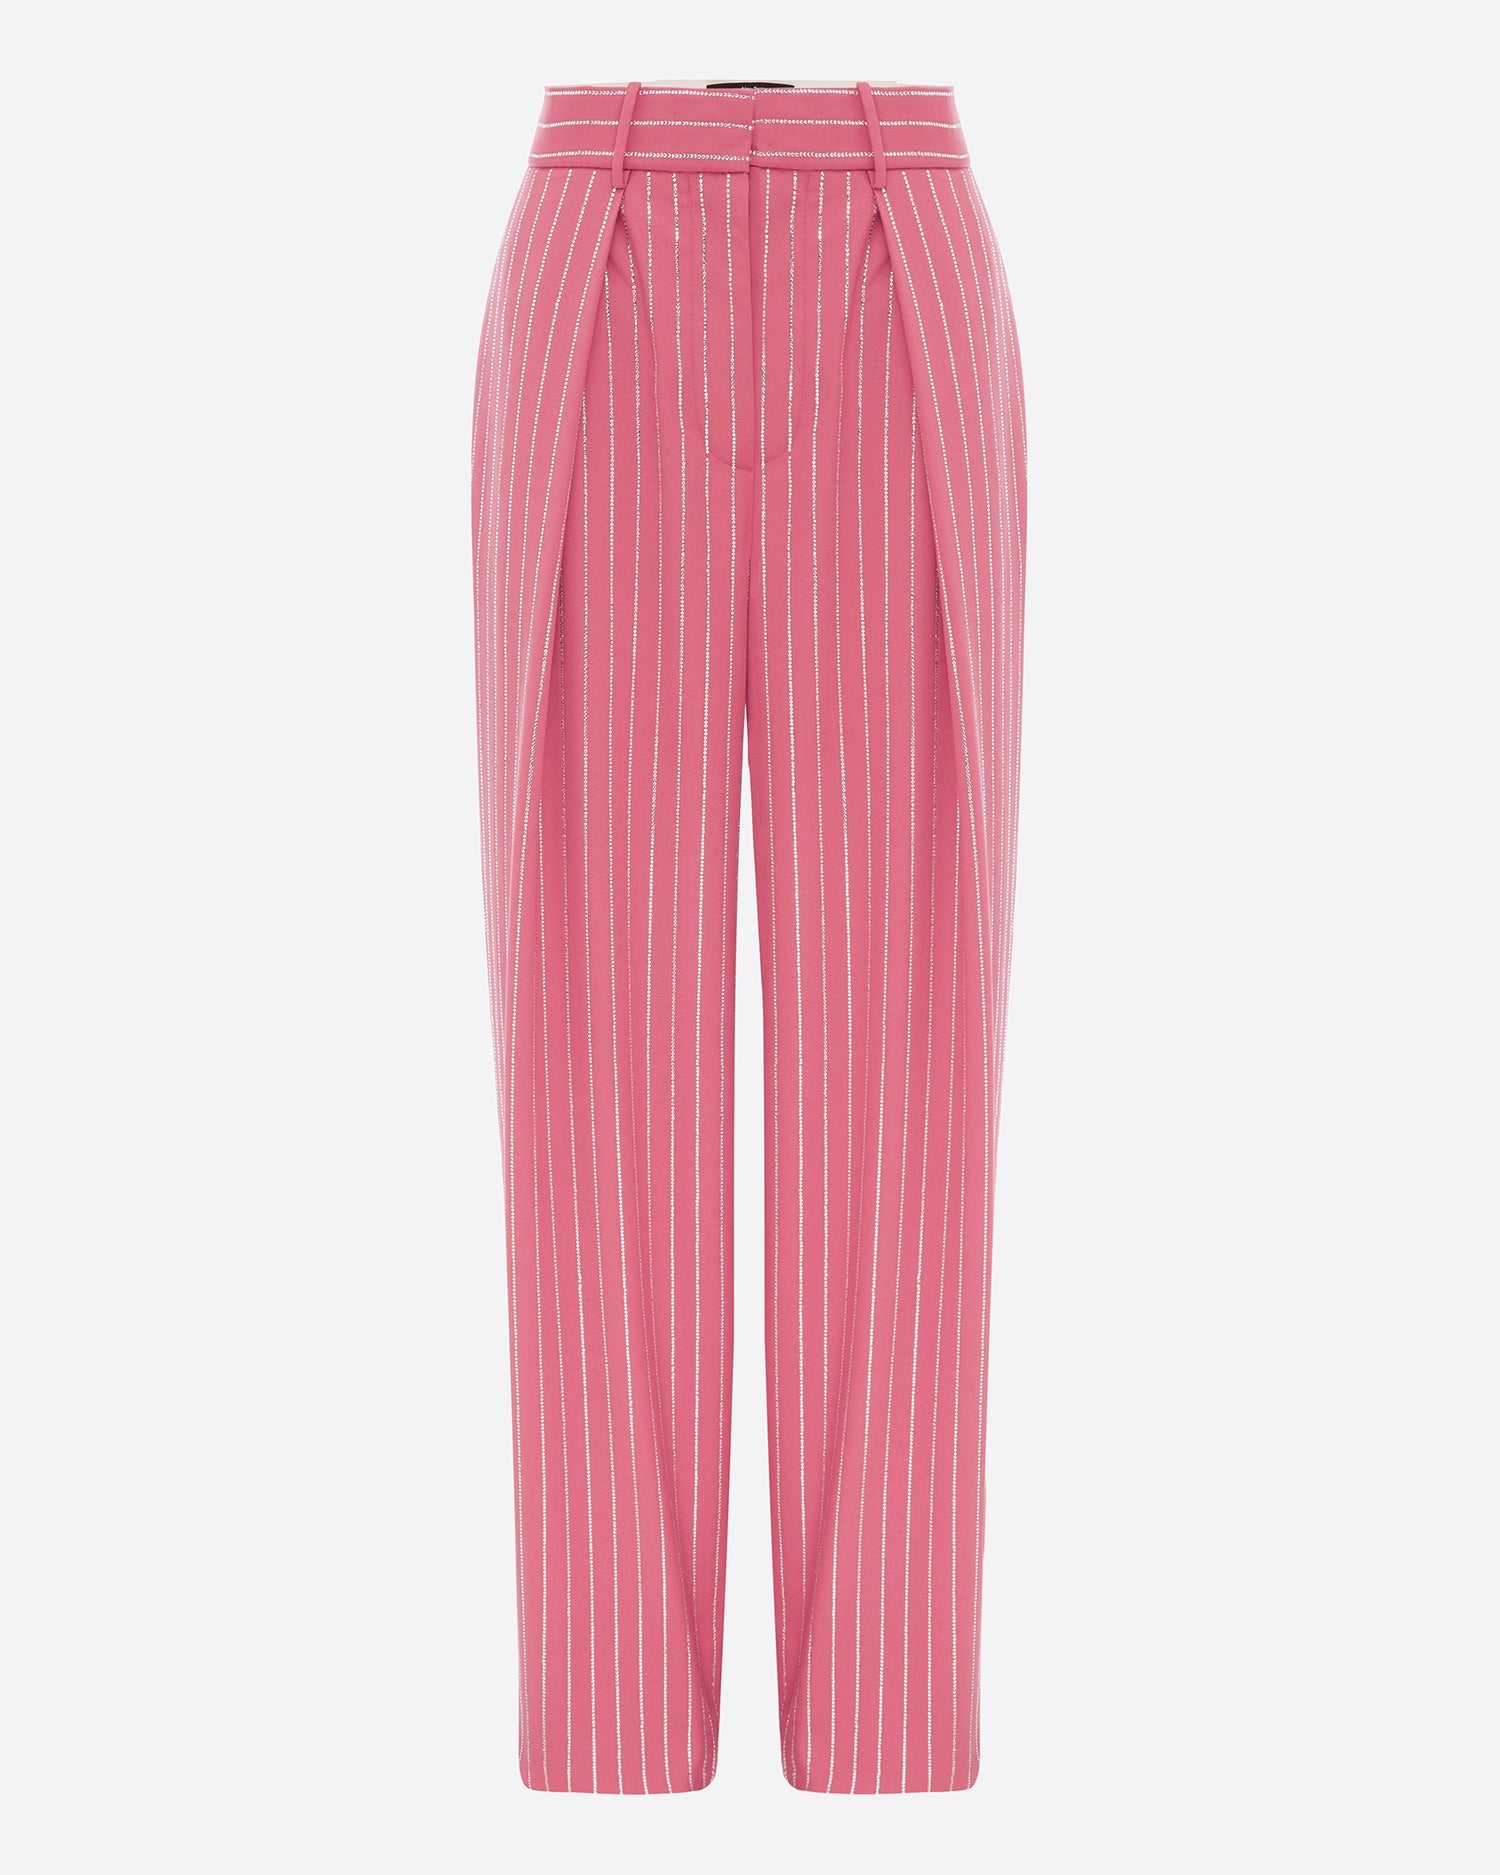 Low Rise Pleat Trouser in Crystal Pinstripe